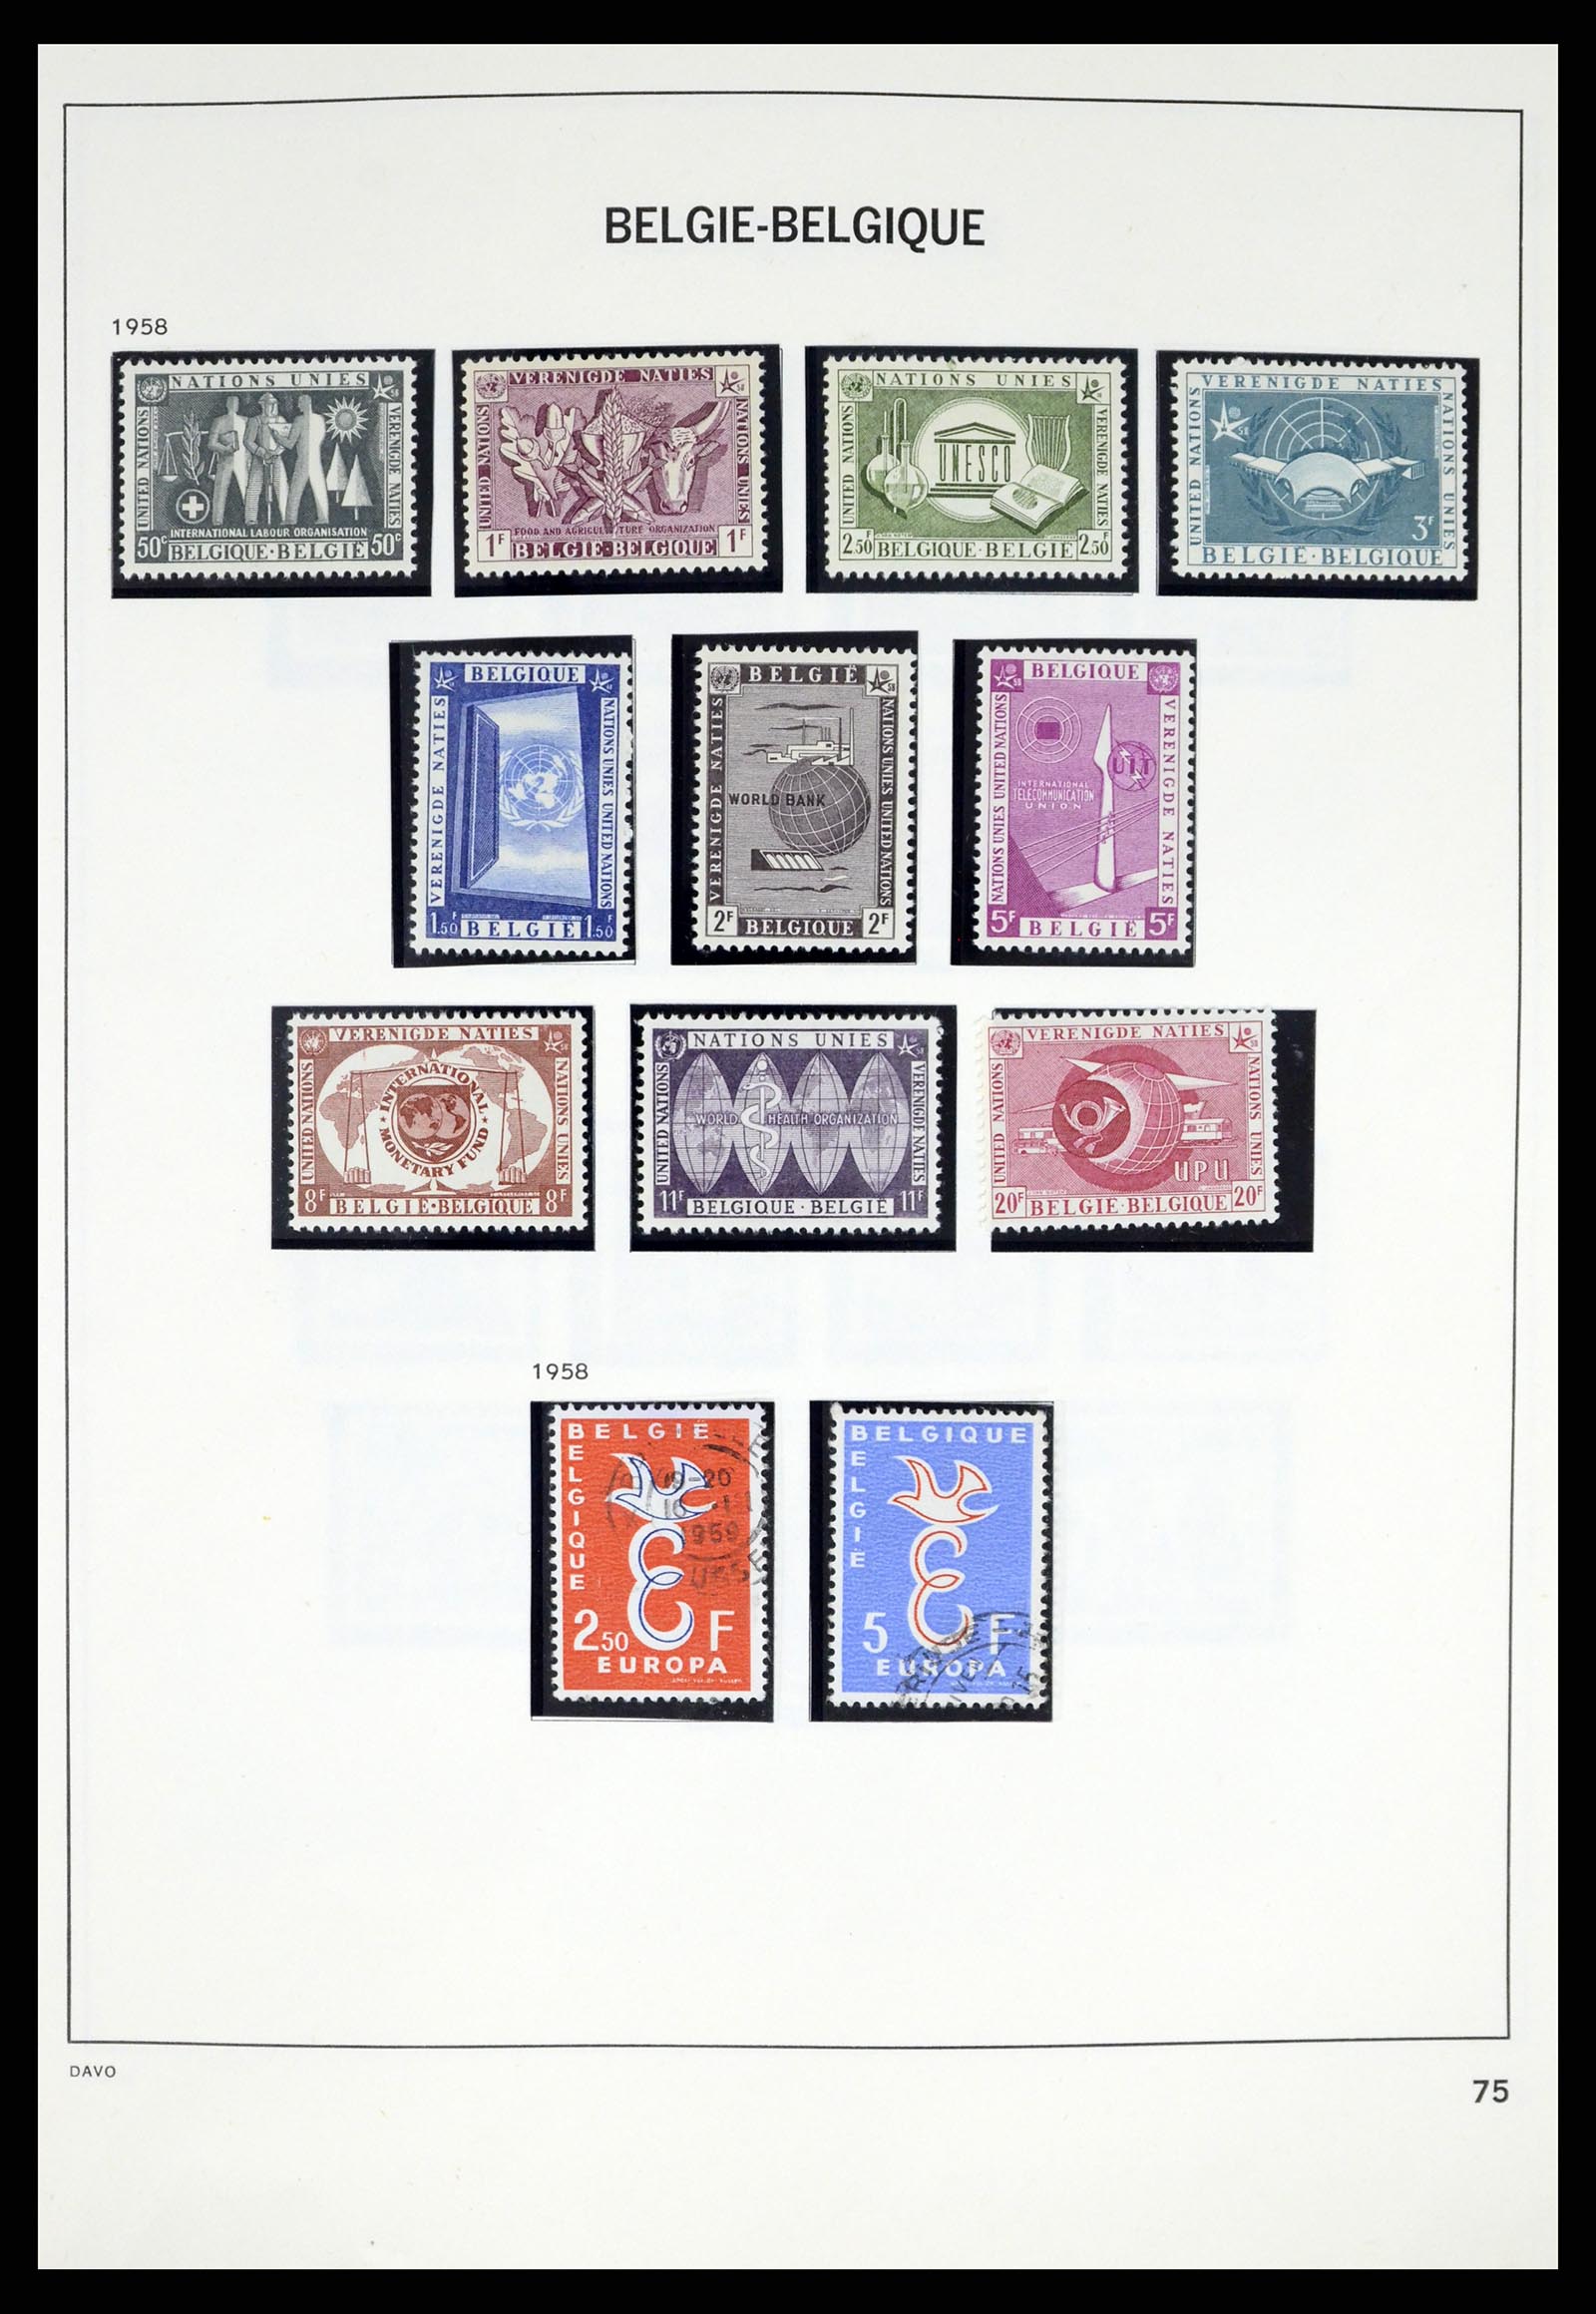 37367 071 - Stamp collection 37367 Belgium 1849-2003.